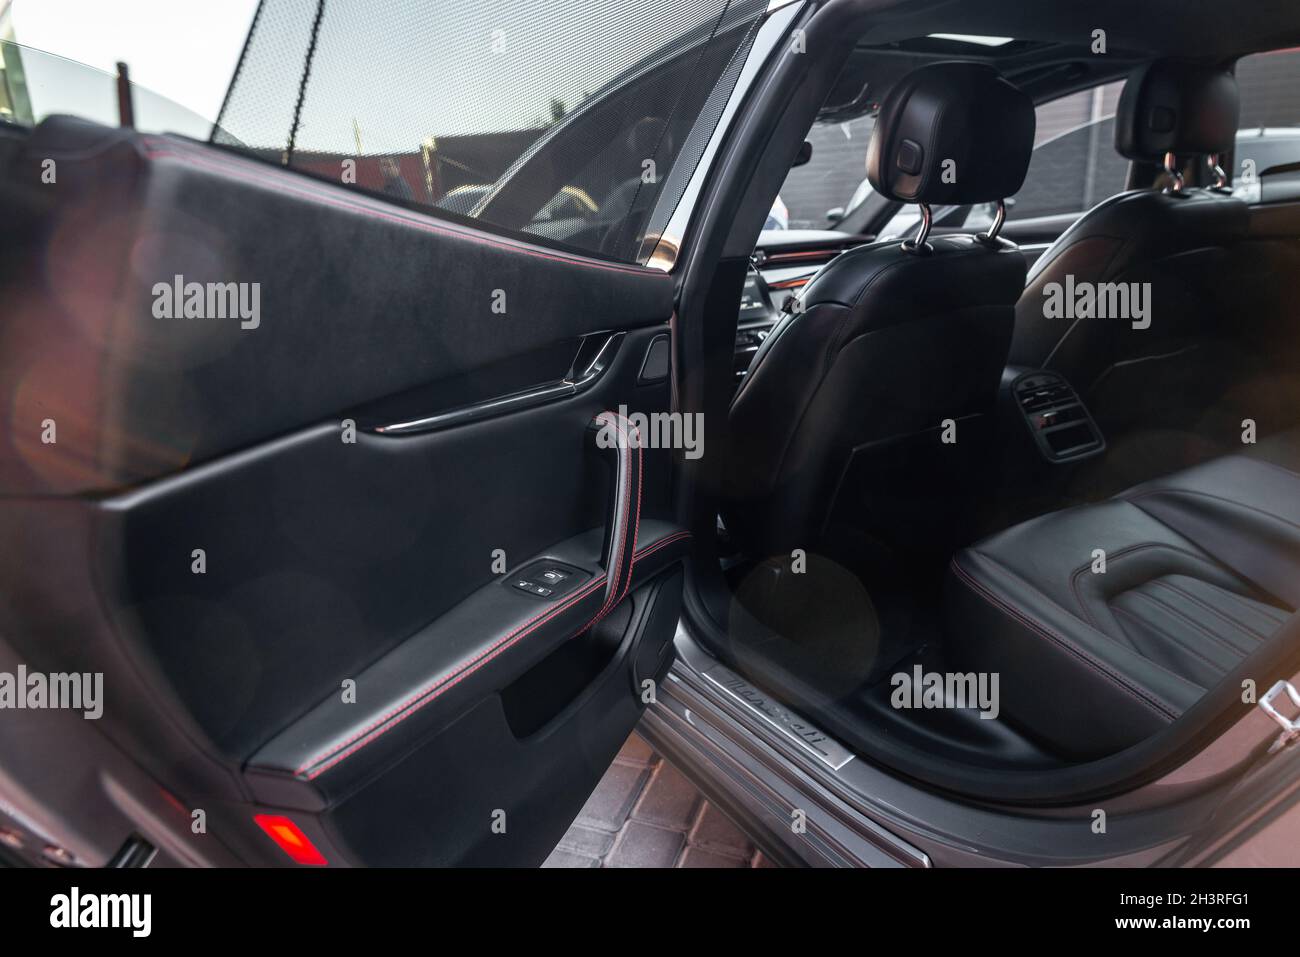 Modern luxury car inside. Comfortable black leather seats - back passengers seat Stock Photo